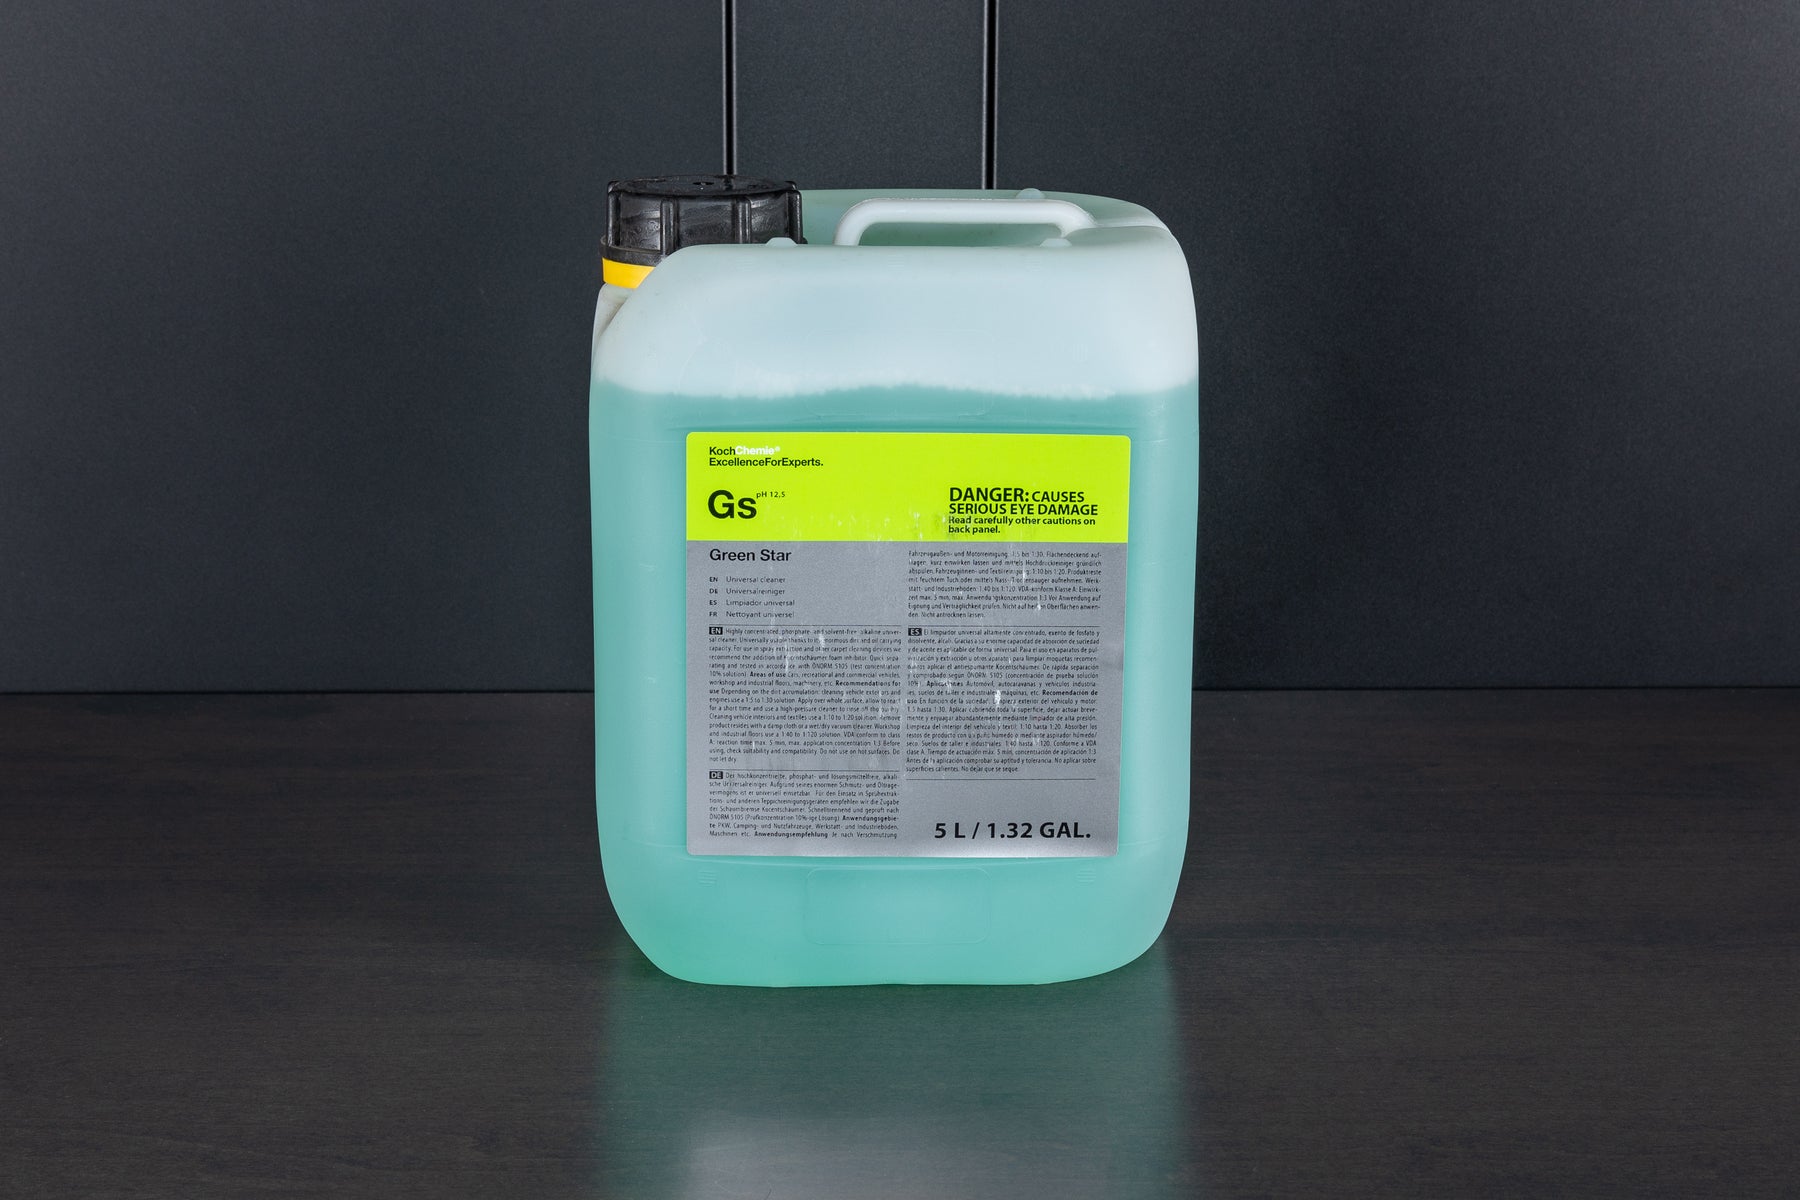 Koch Chemie (Gs) Green Star (Universal Cleaner) 11kg – XPERT DETAILING